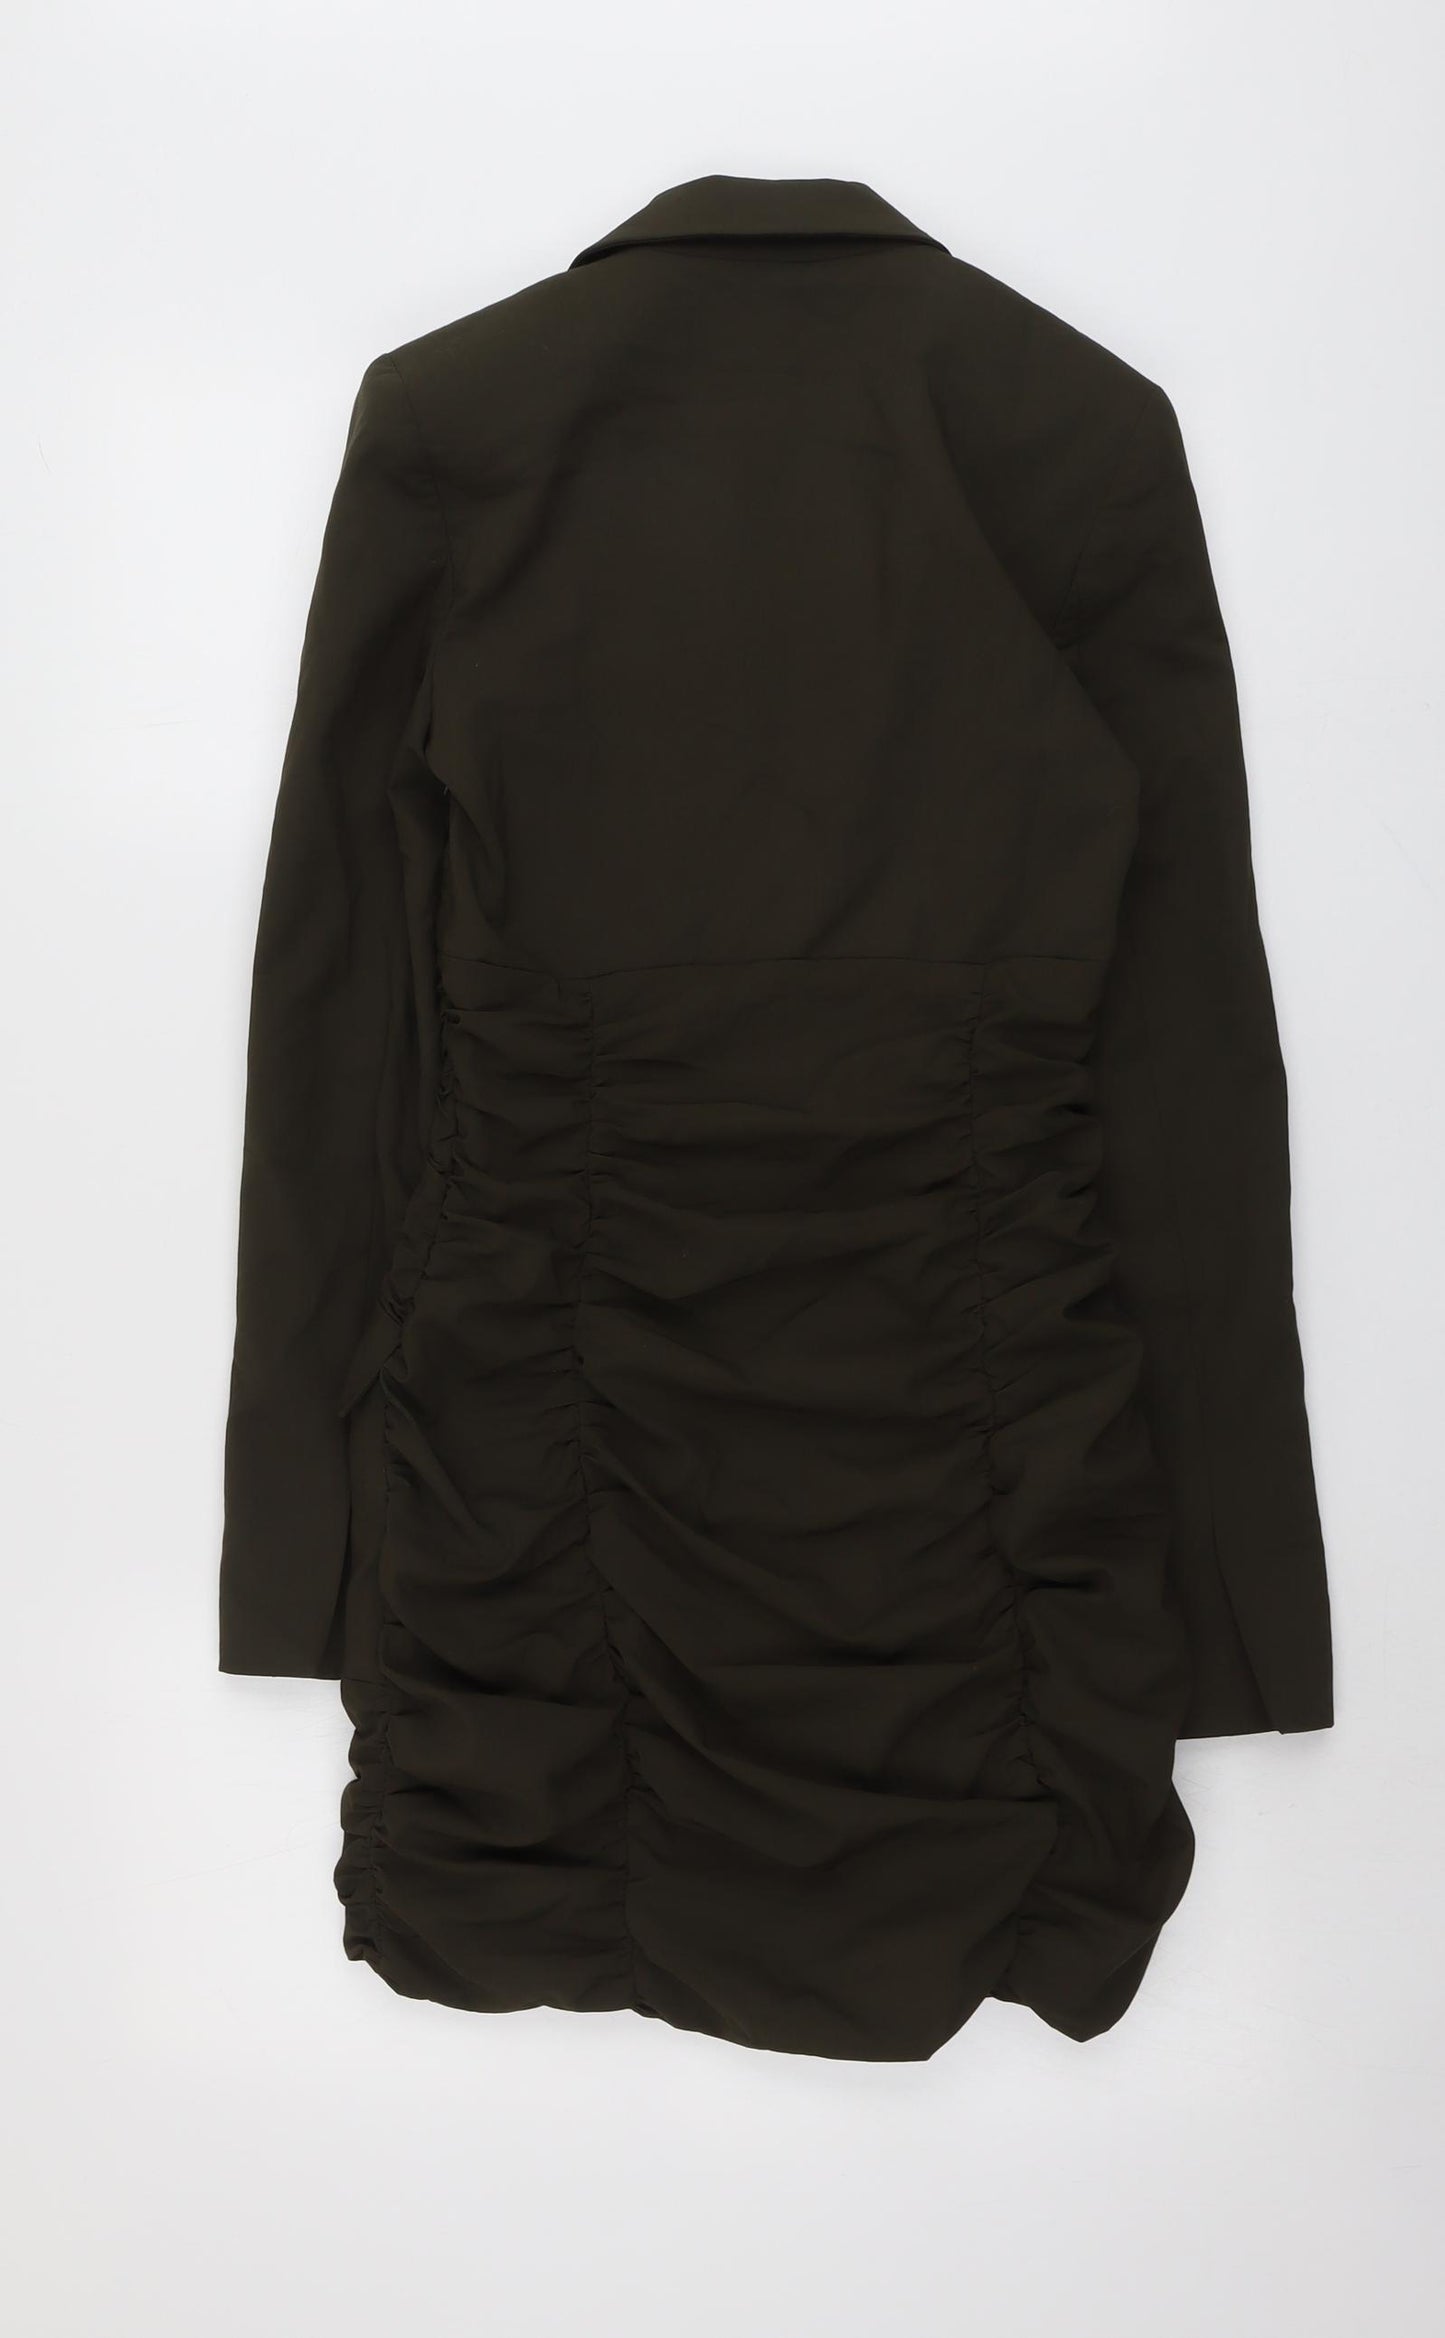 Zara Womens Green Polyester Jacket Dress Size XS Collared Zip